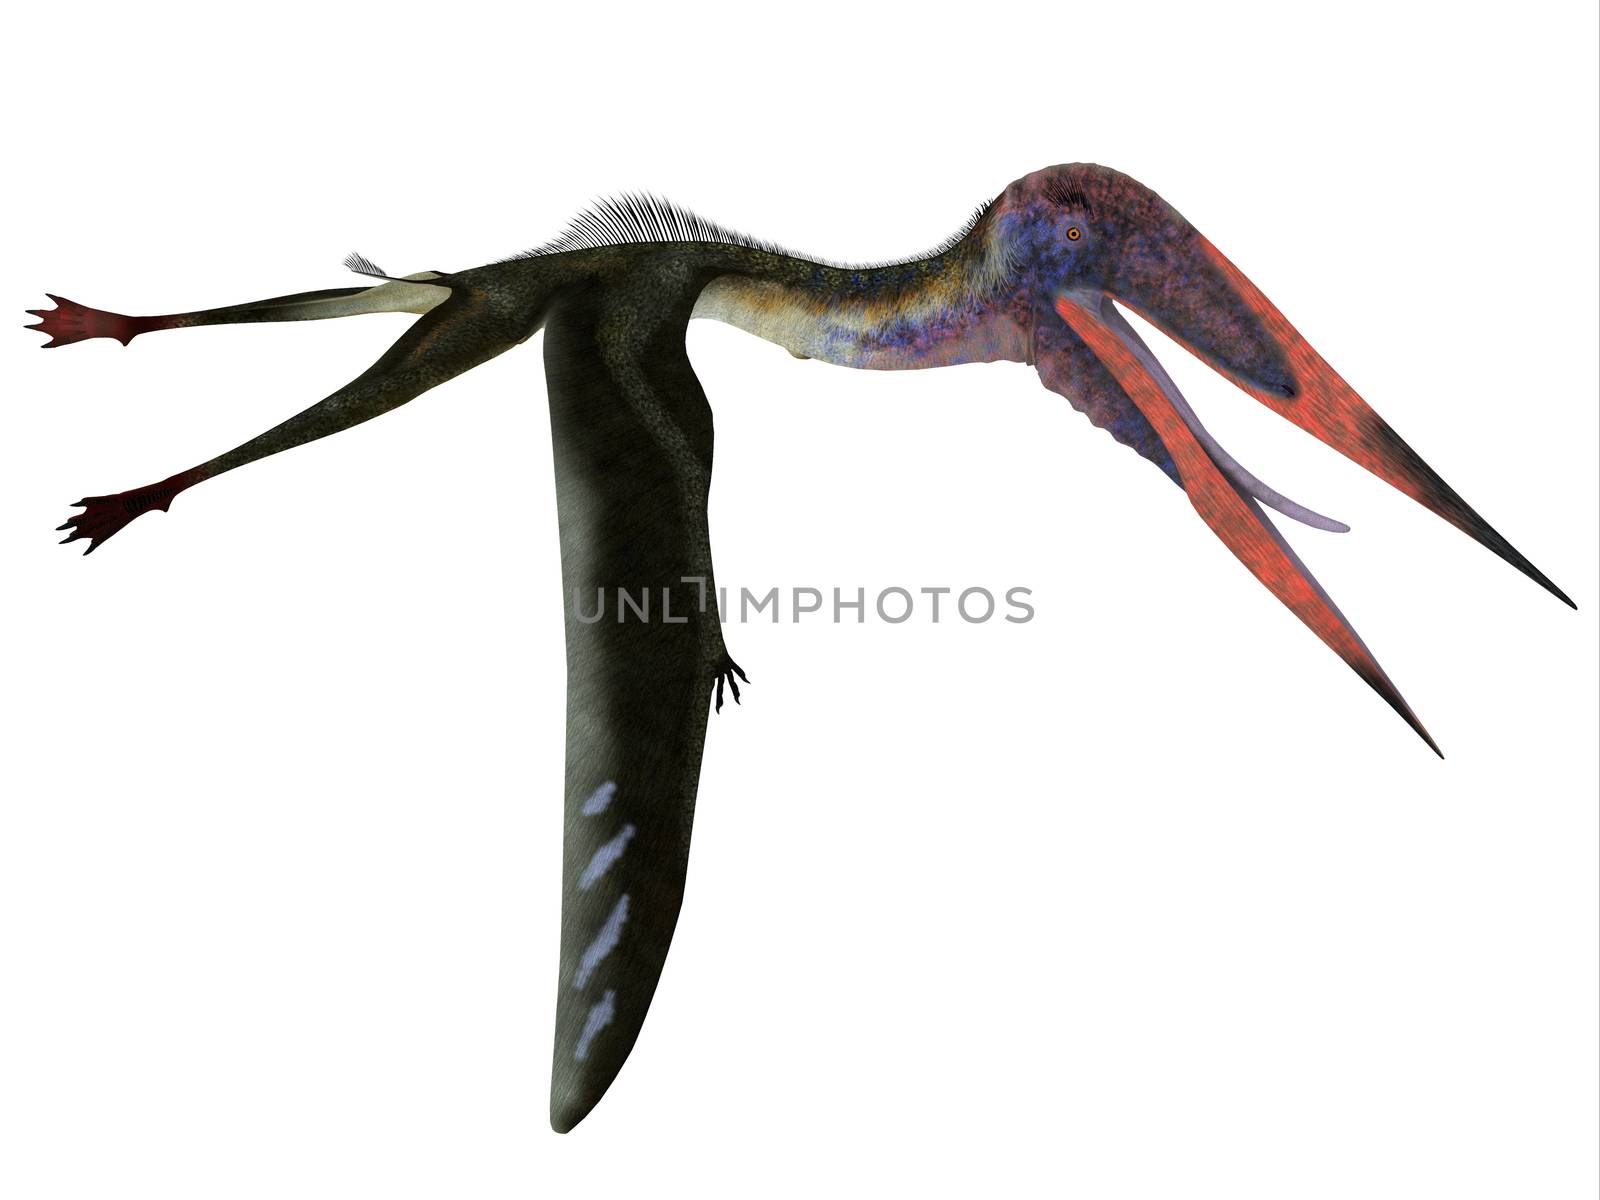 Zhejiangopterus Pterosaur Flying by Catmando